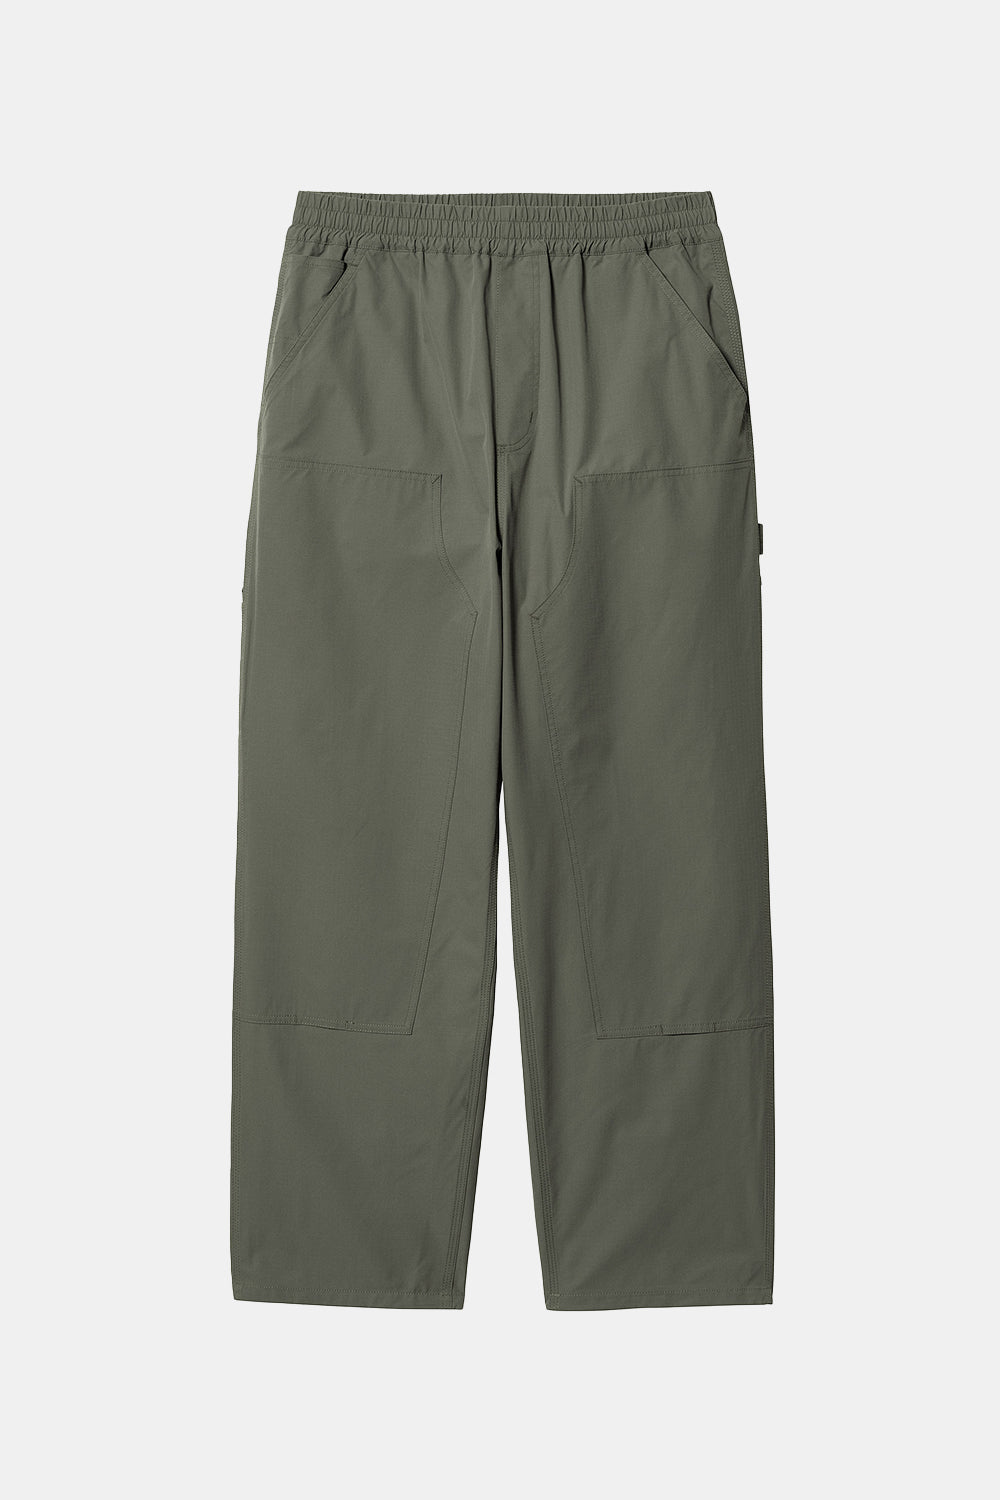 Carhartt WIP Montana Pants (Smoke Green)